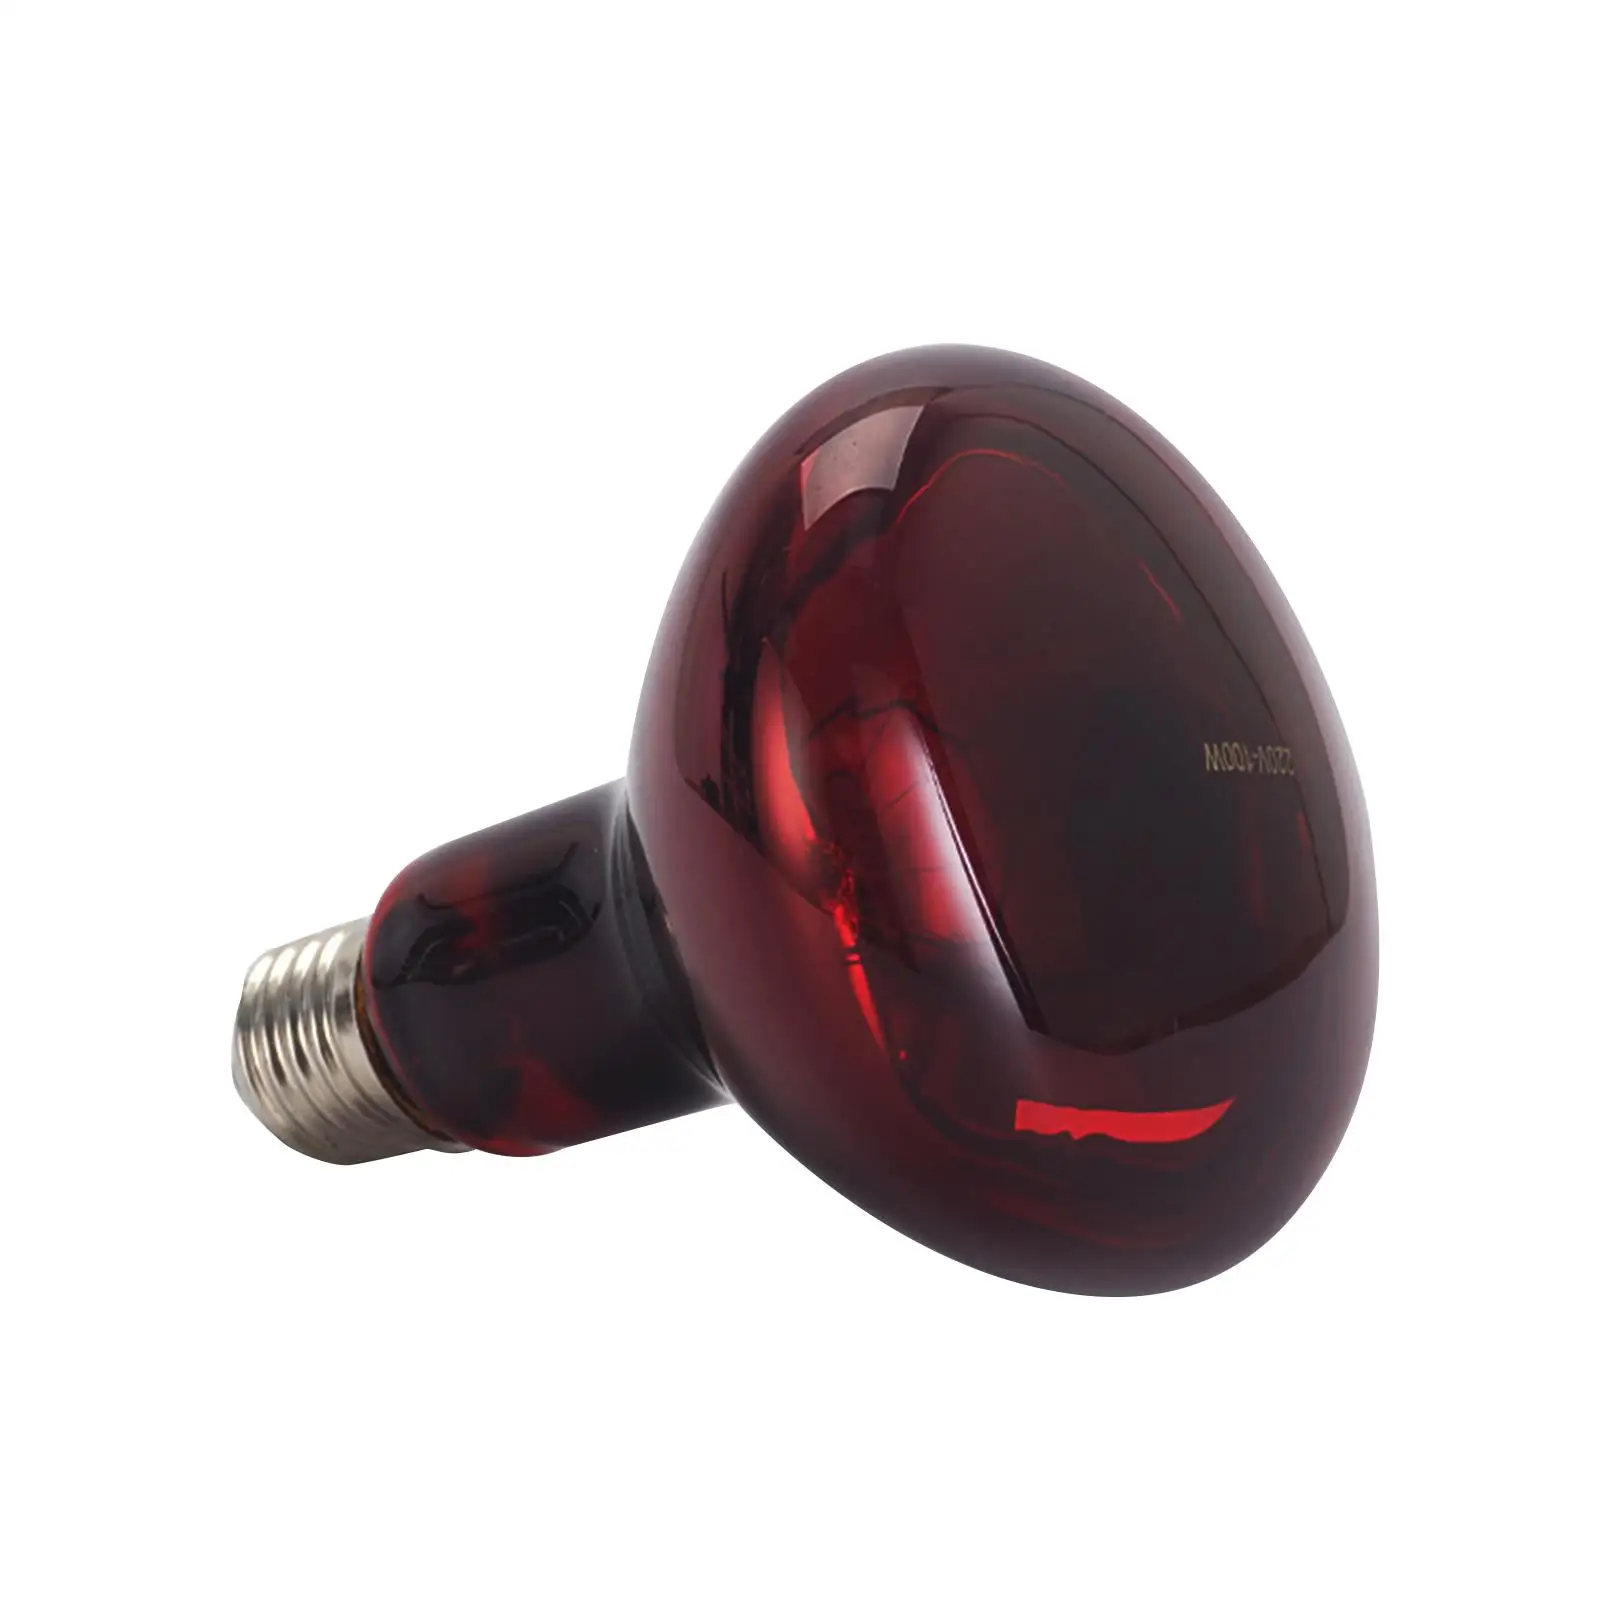 Red Reptile Light Bulb, Warmer, Heating Lamp Pet Supplies Basking Spot Daylight